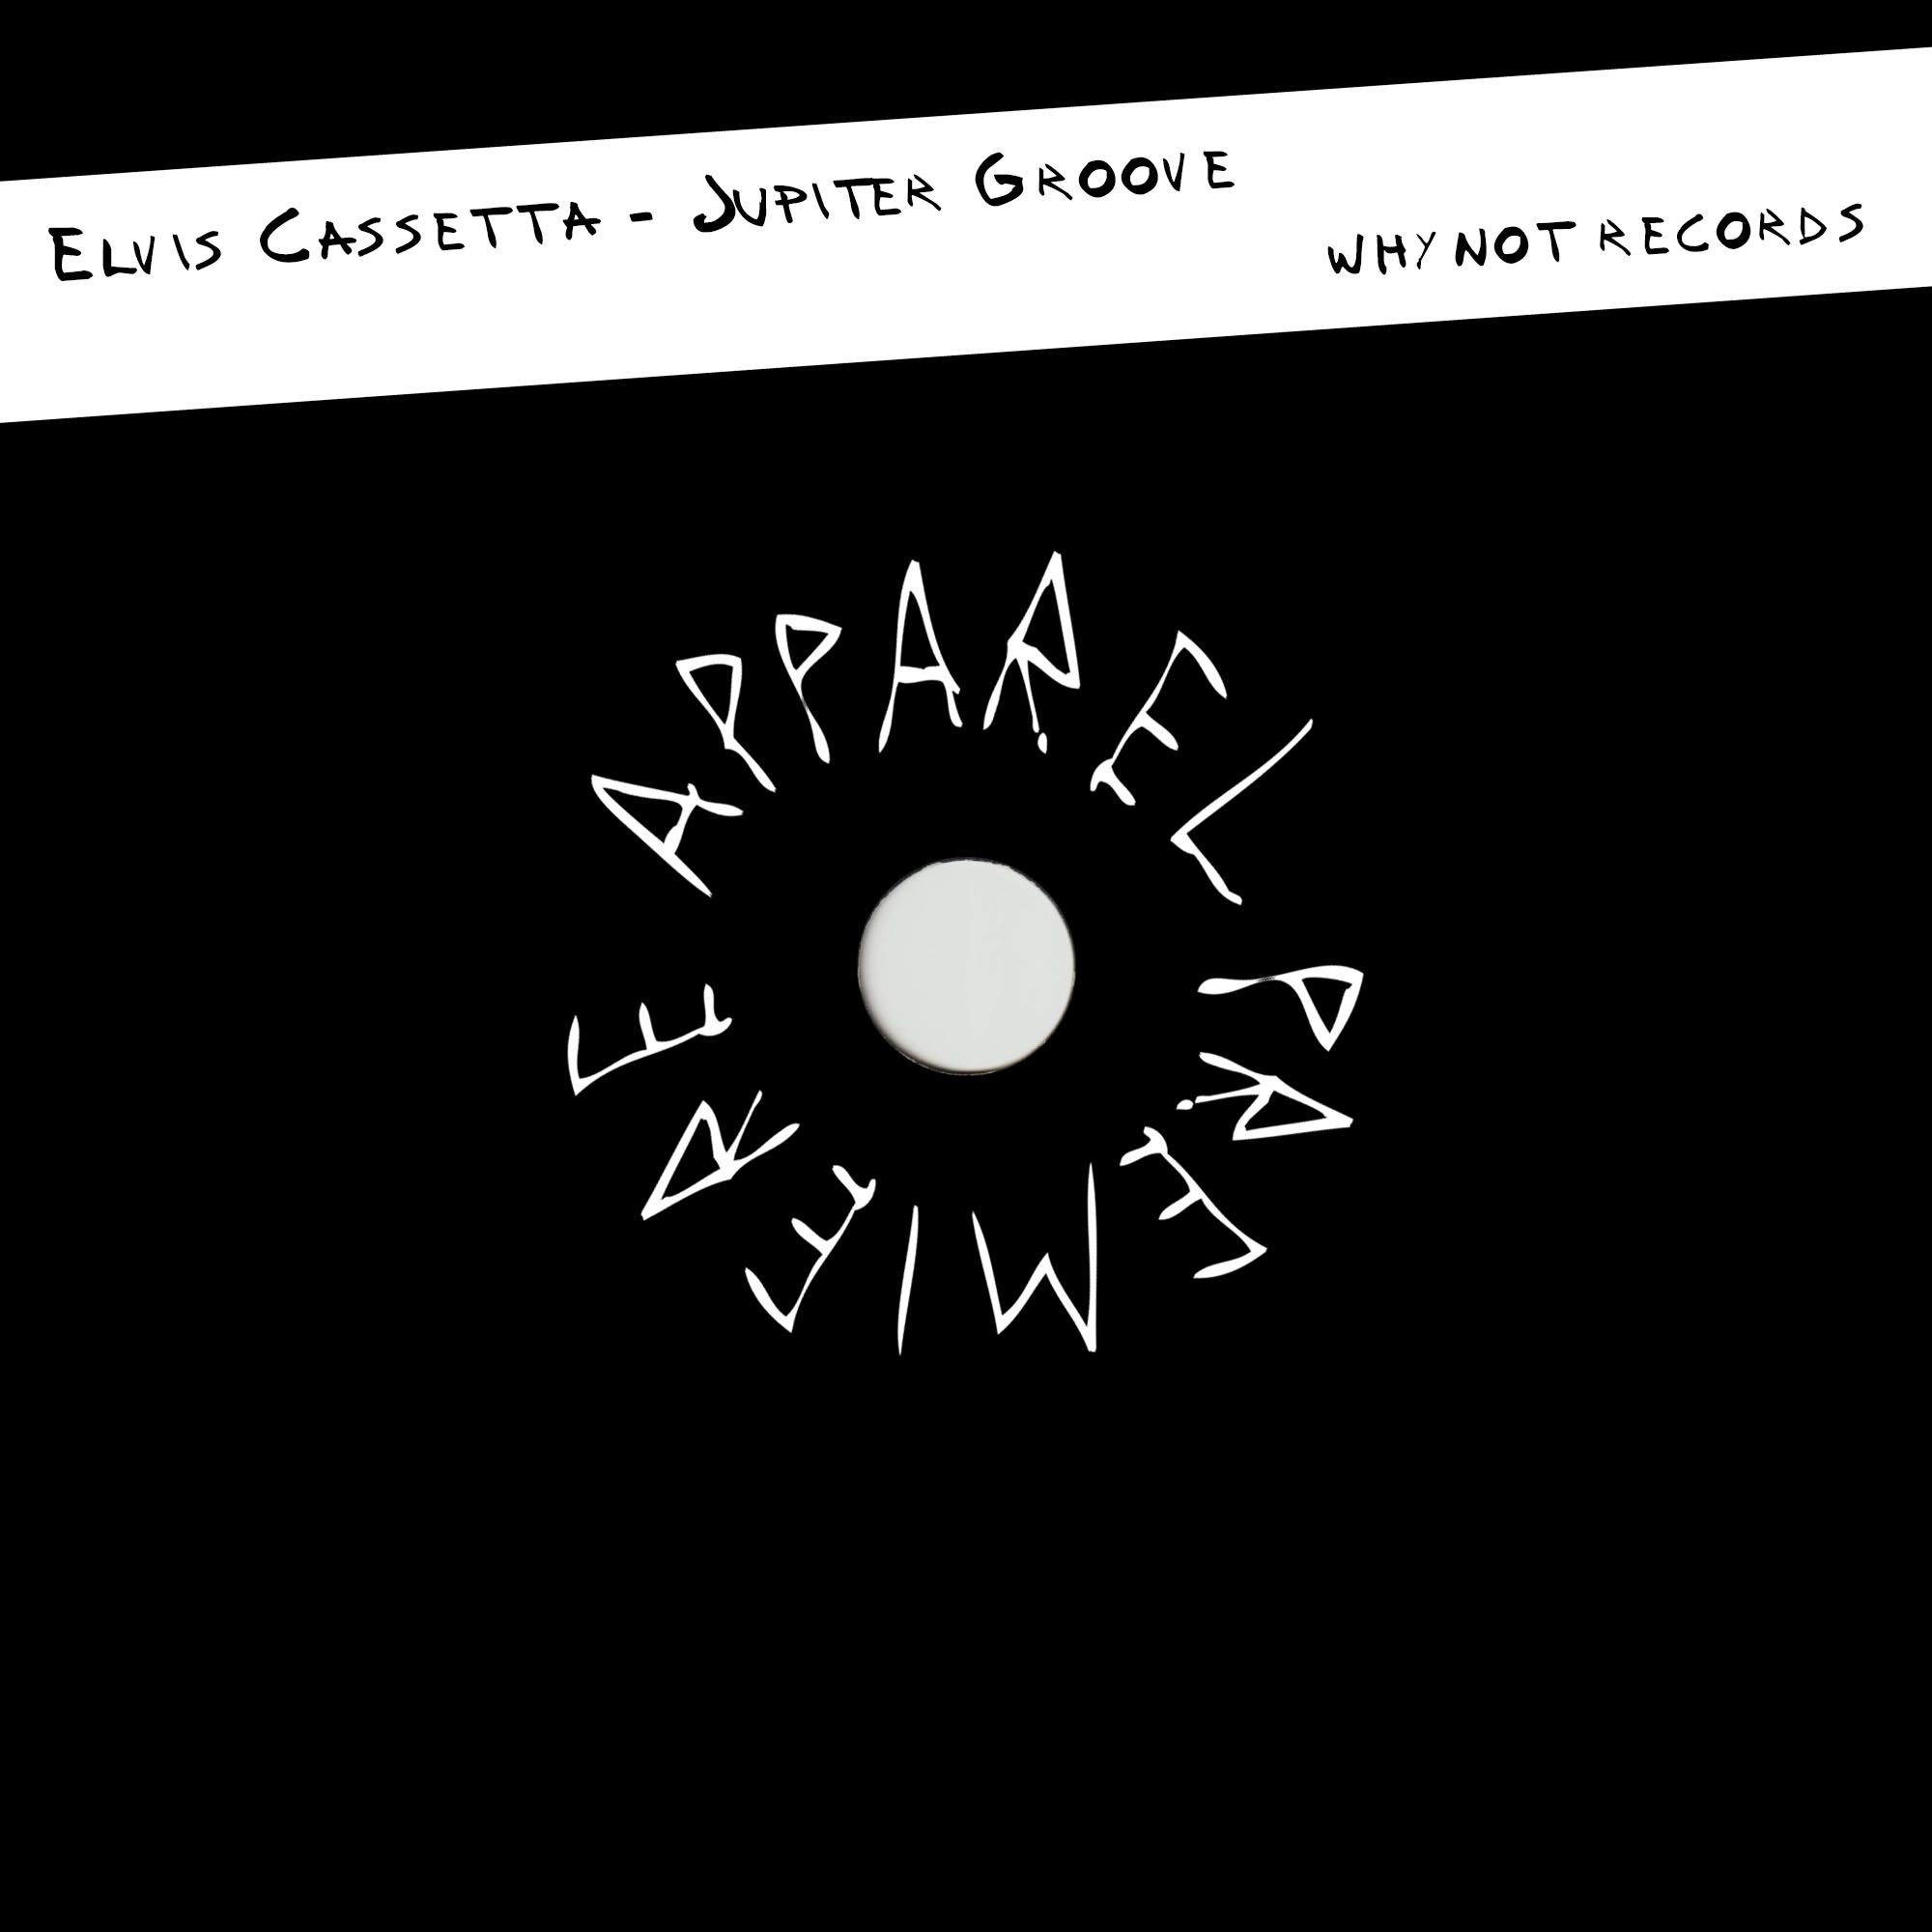 APPAREL PREMIERE Elvis Cassetta – Jupiter Groove [WhyNot Records]